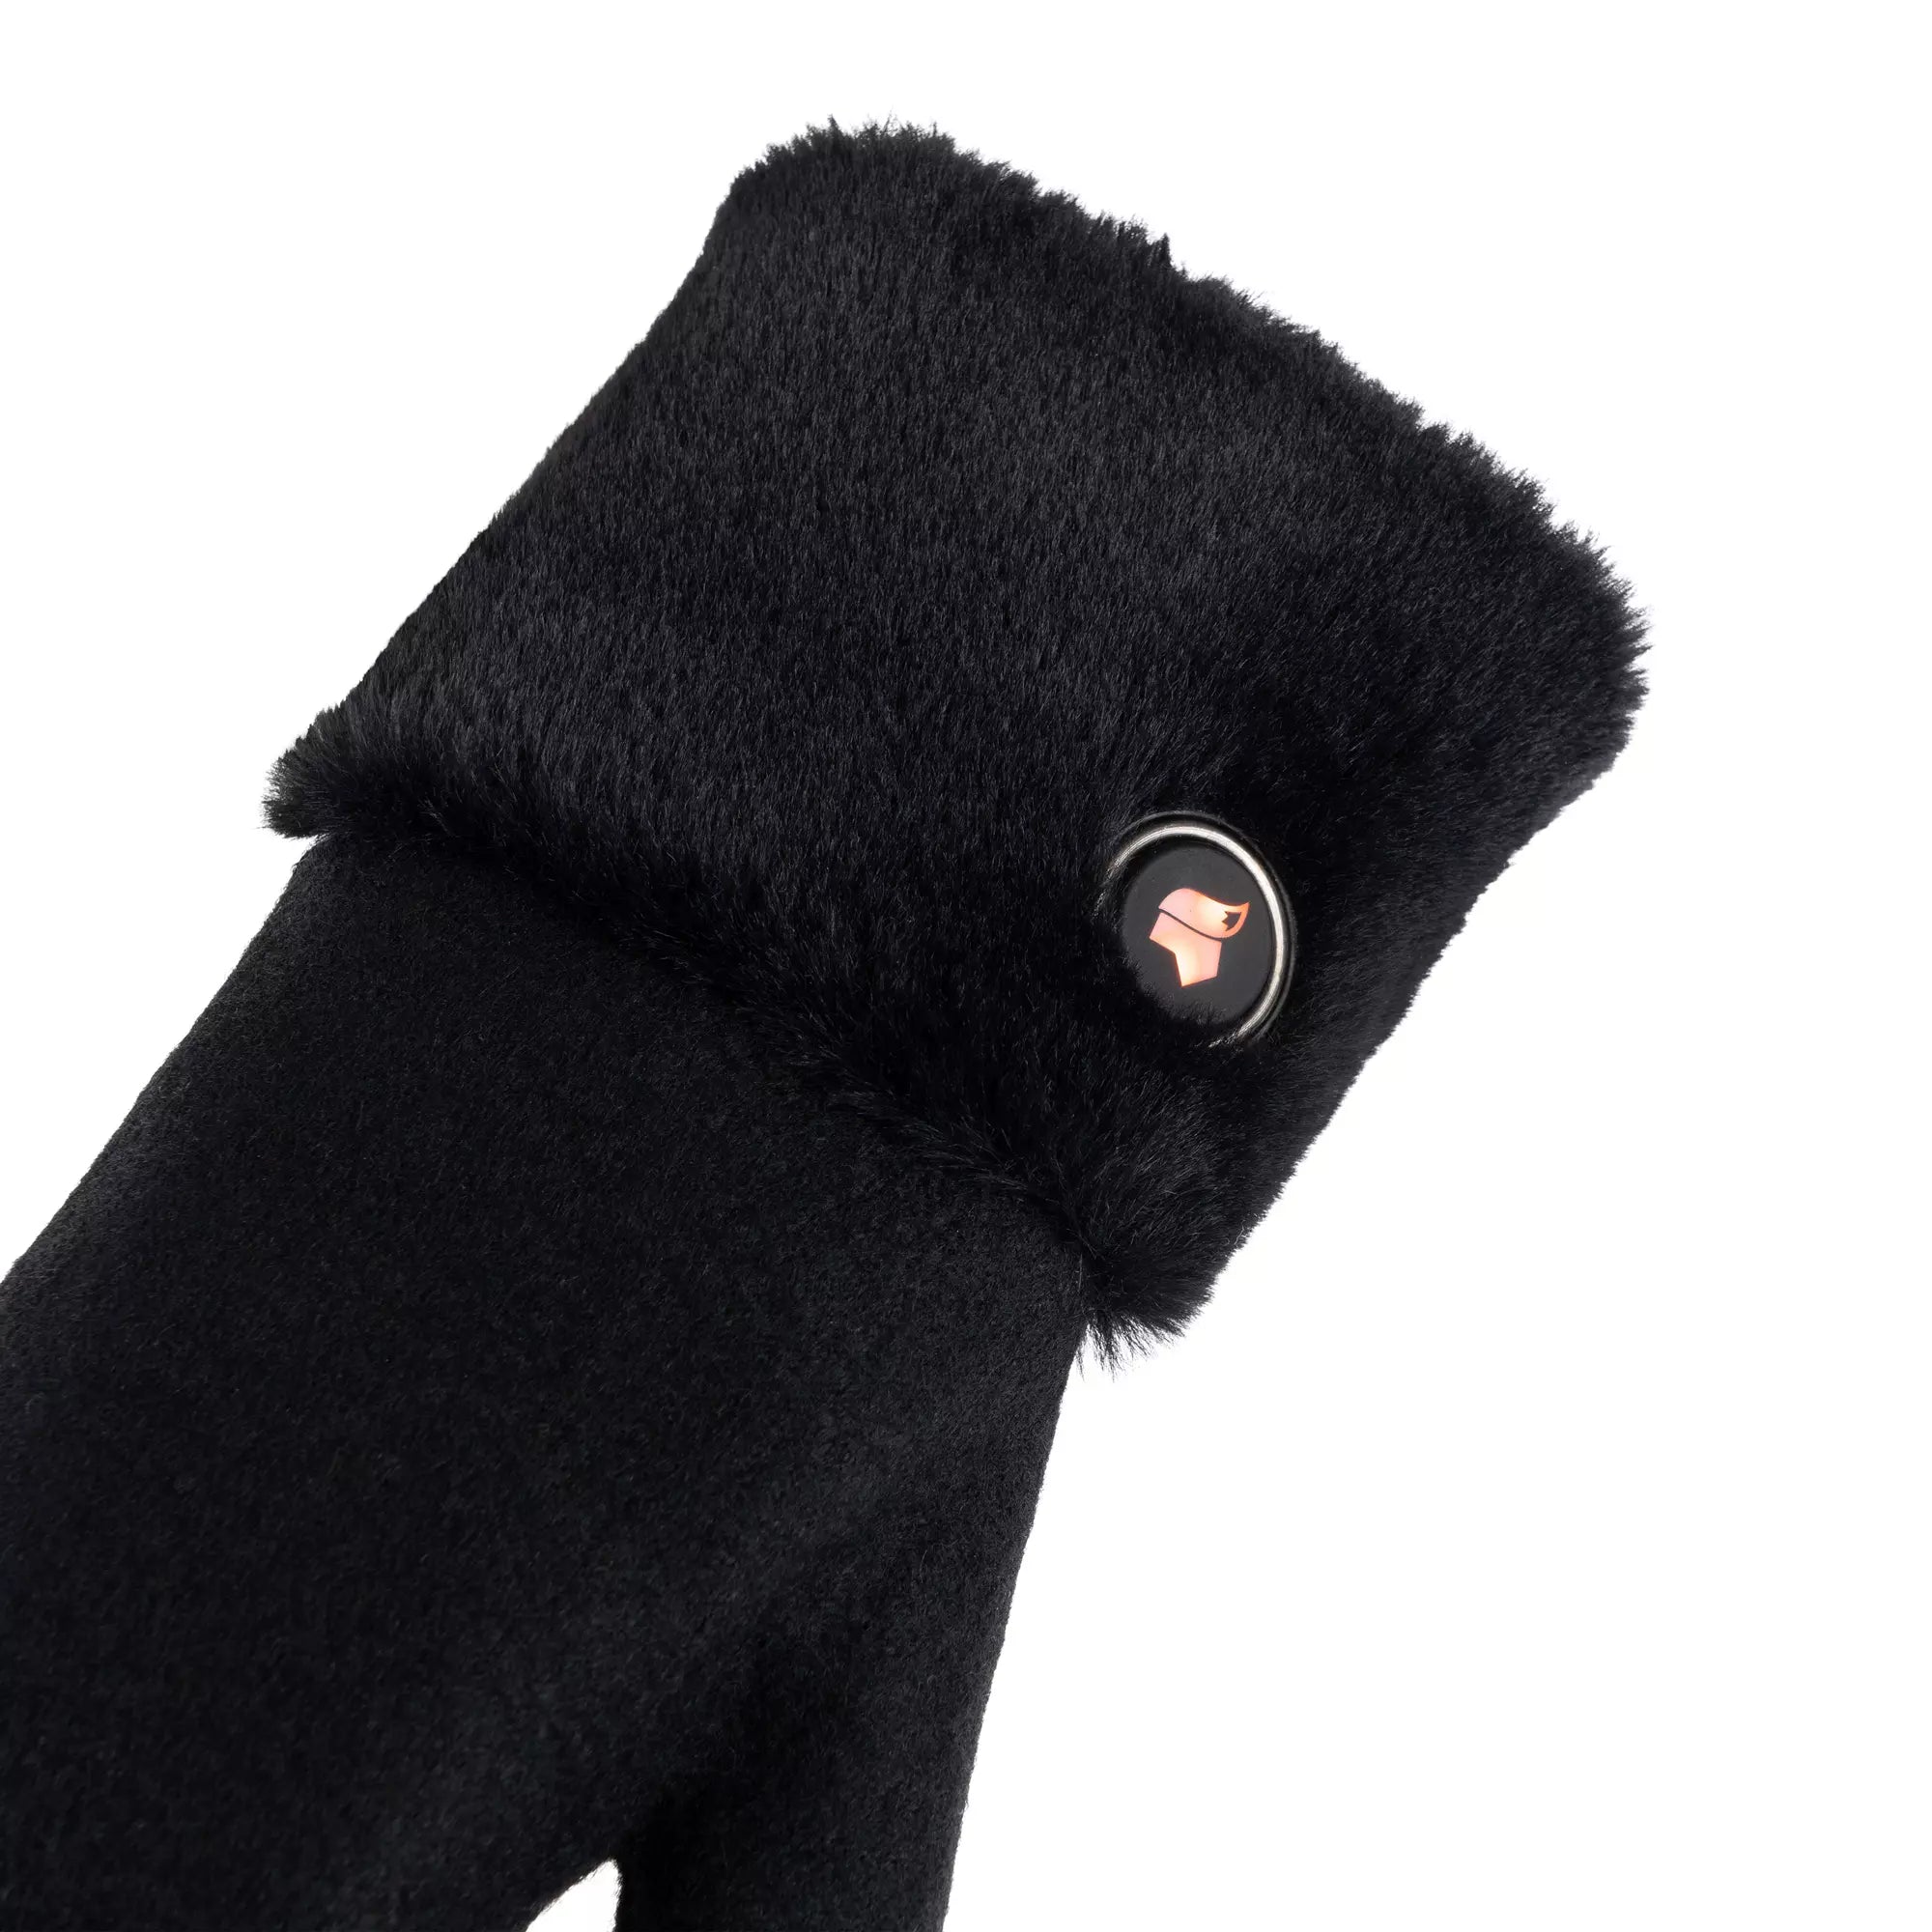 Vulpés Mercury - heated designer mittens